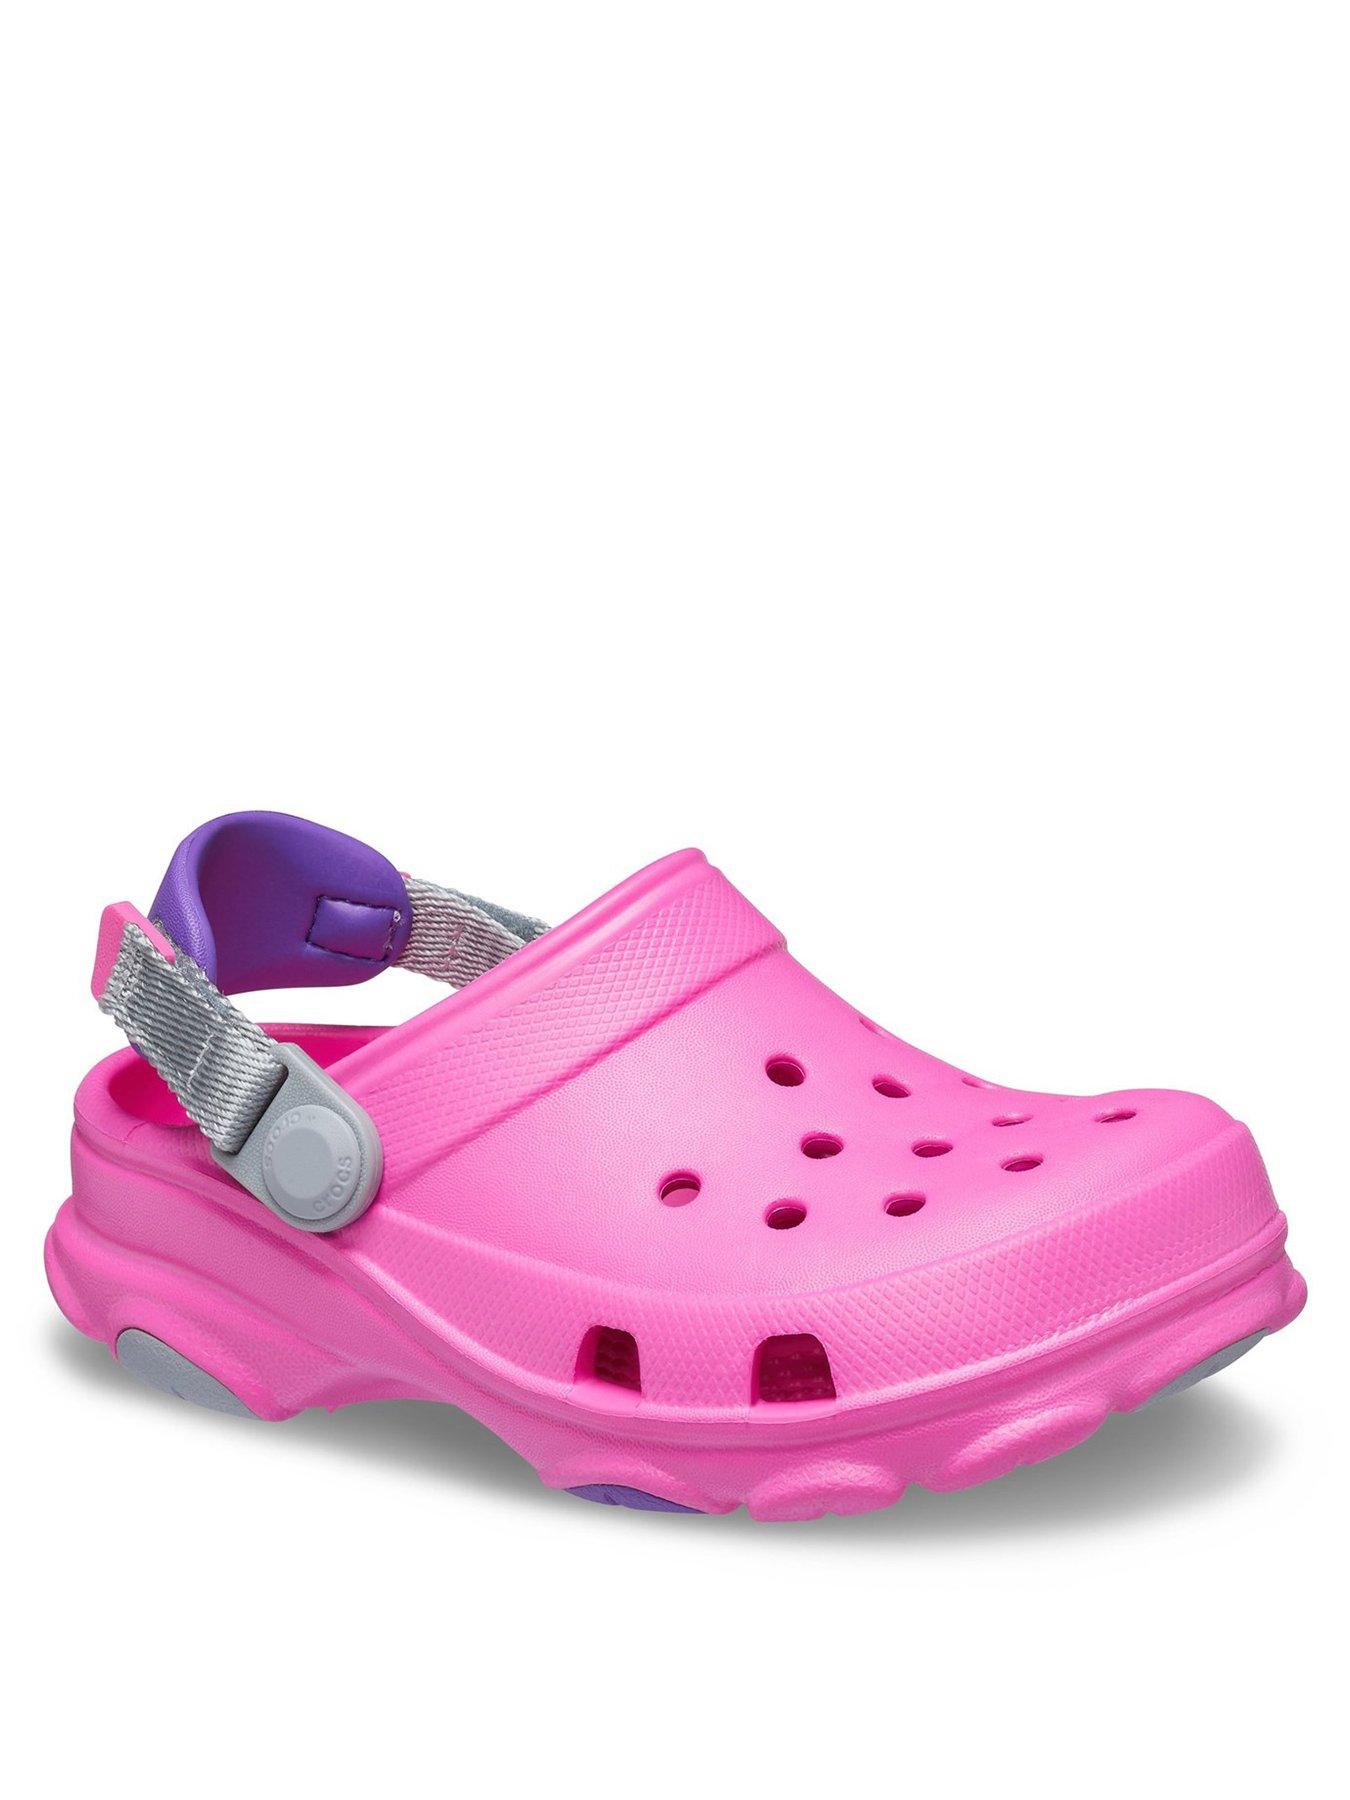 Kids Girls Classic All Terrain Clog Sandals - Pink